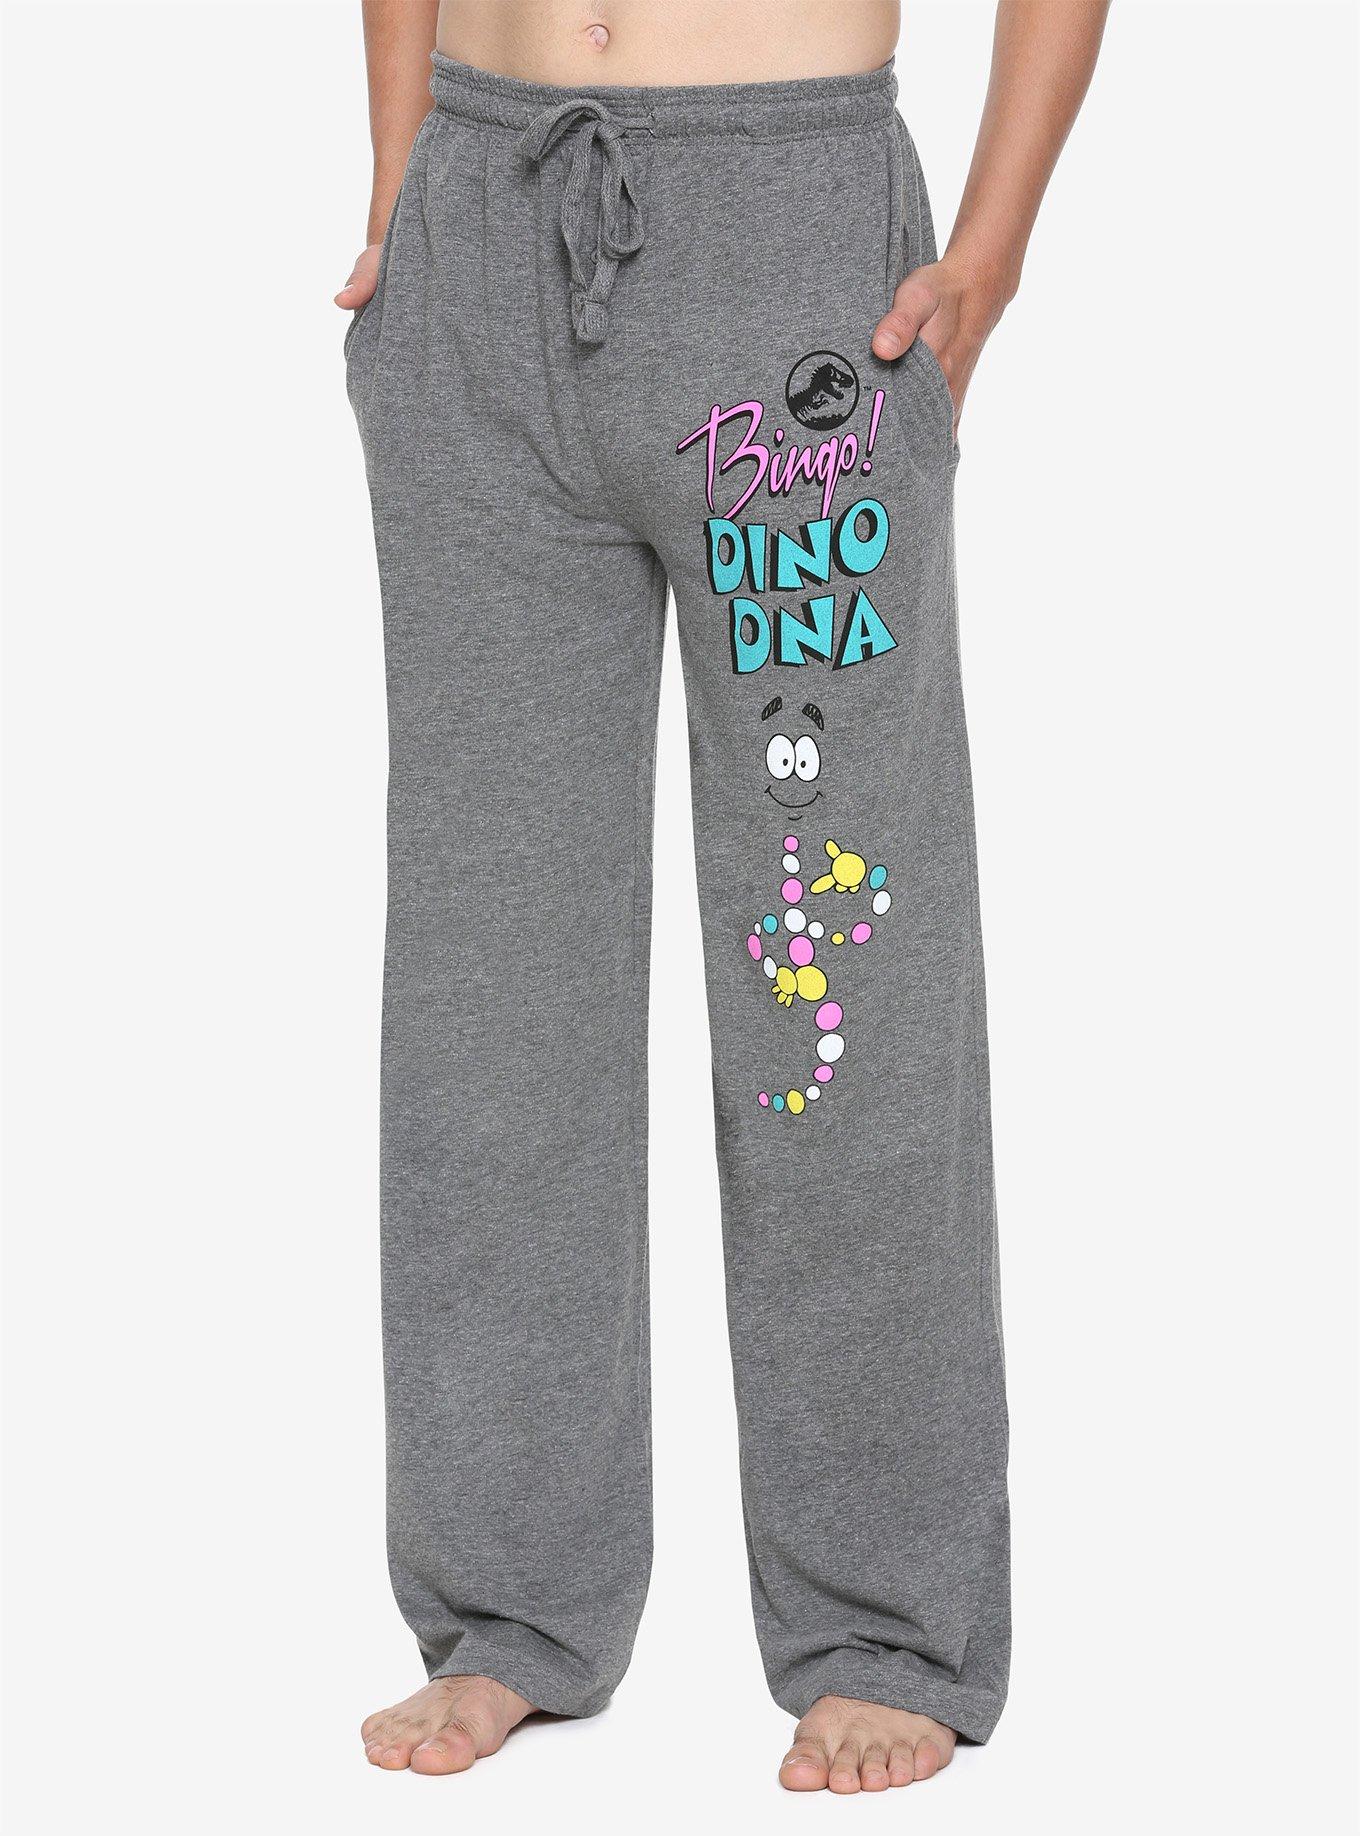 Jurassic Park Bingo! DNA Guys Pajama Pants, GREY, hi-res